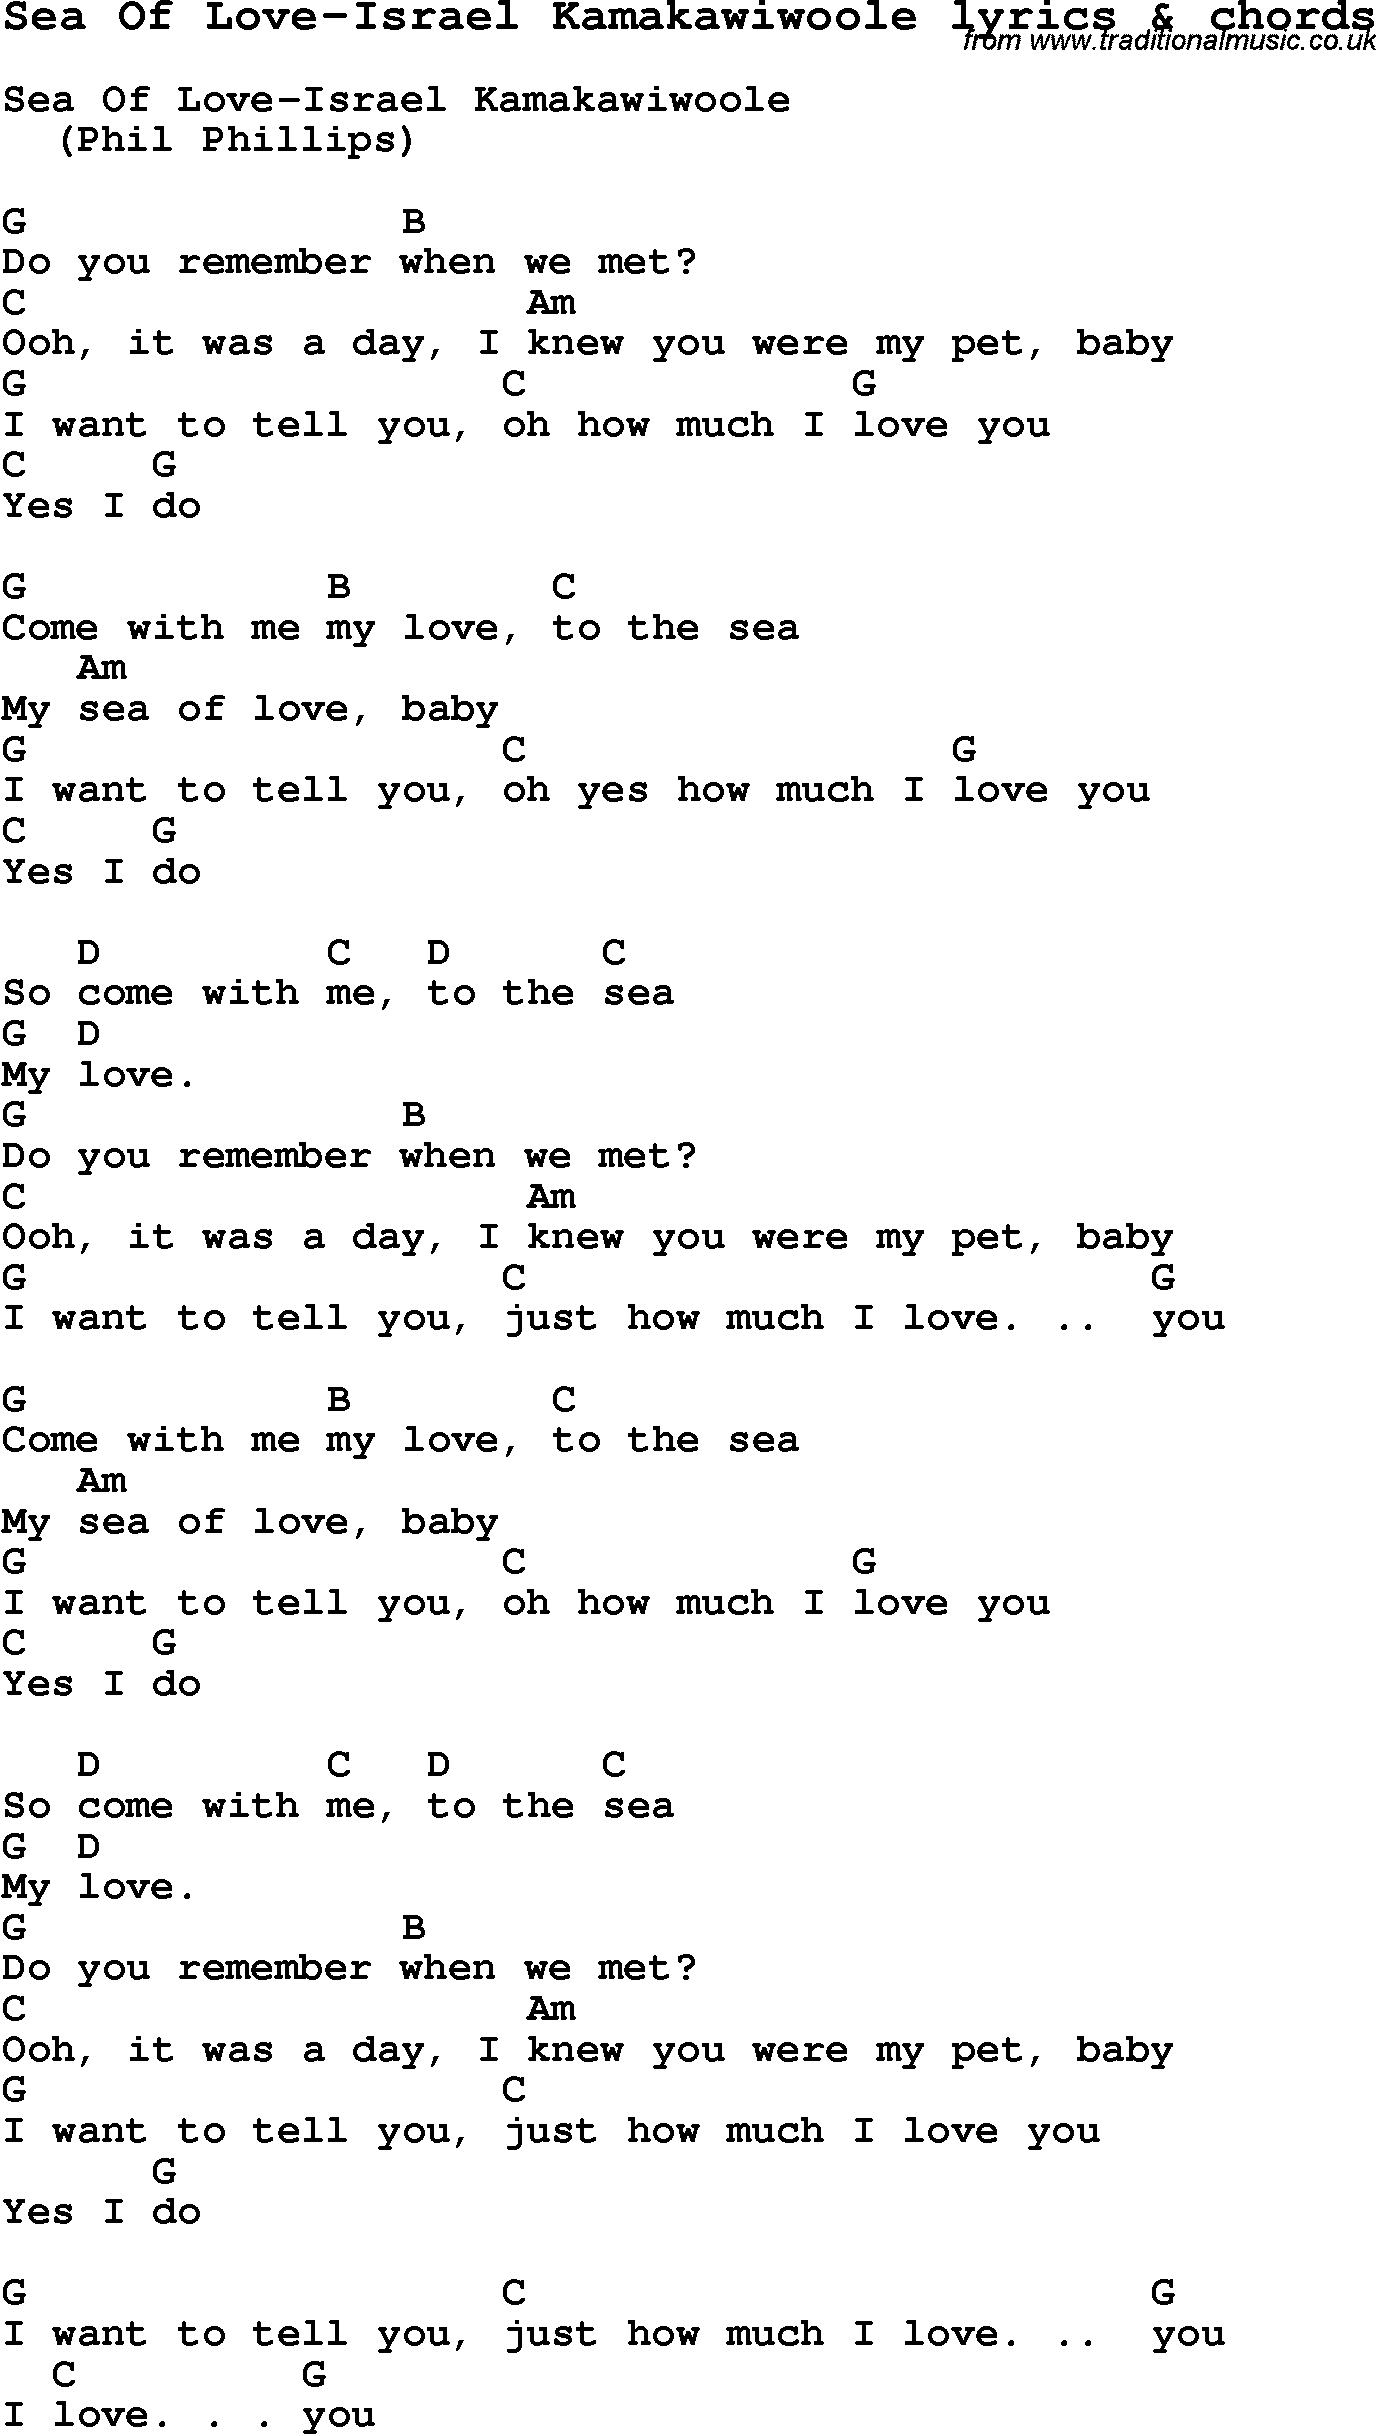 Sea Of Love Chords Love Song Lyrics Forsea Of Love Israel Kamakawiwoole With Chords